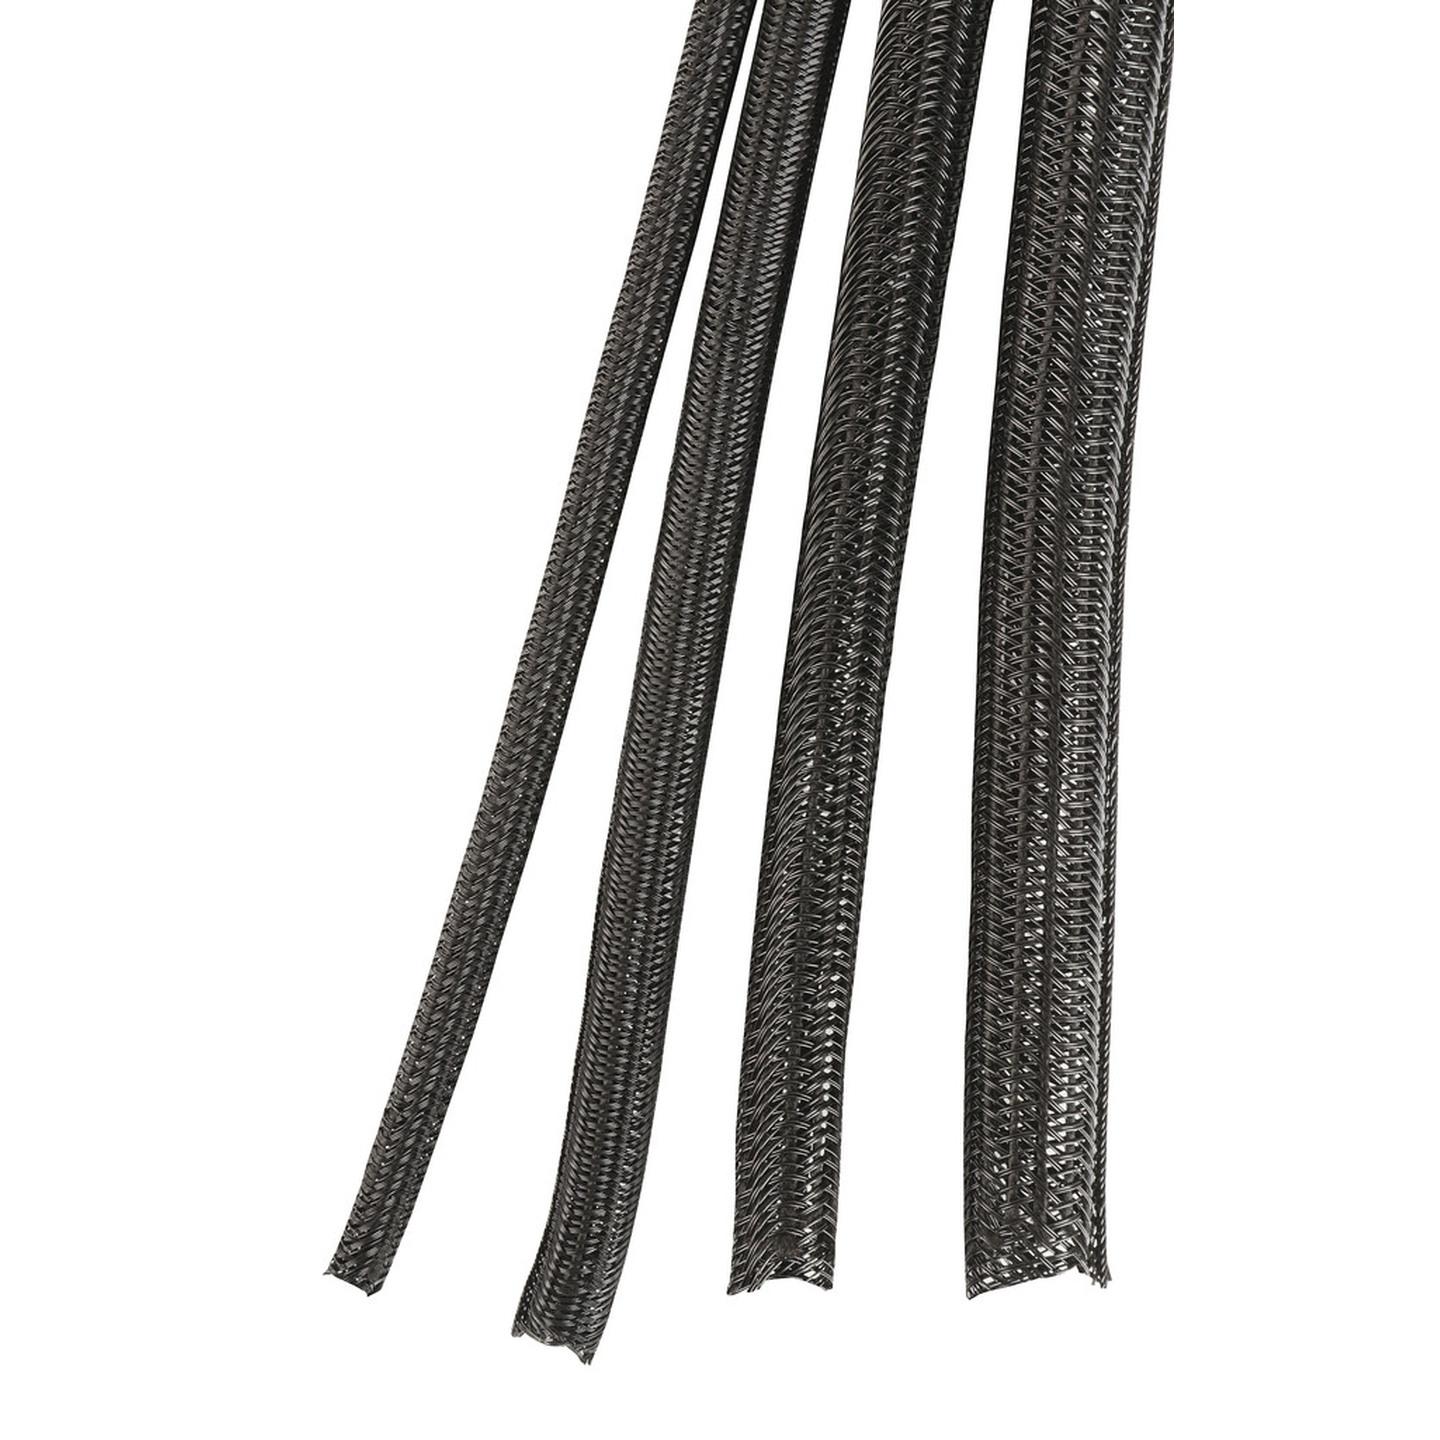 Self-closing Braided Wire Wrap - 6mm x 2m